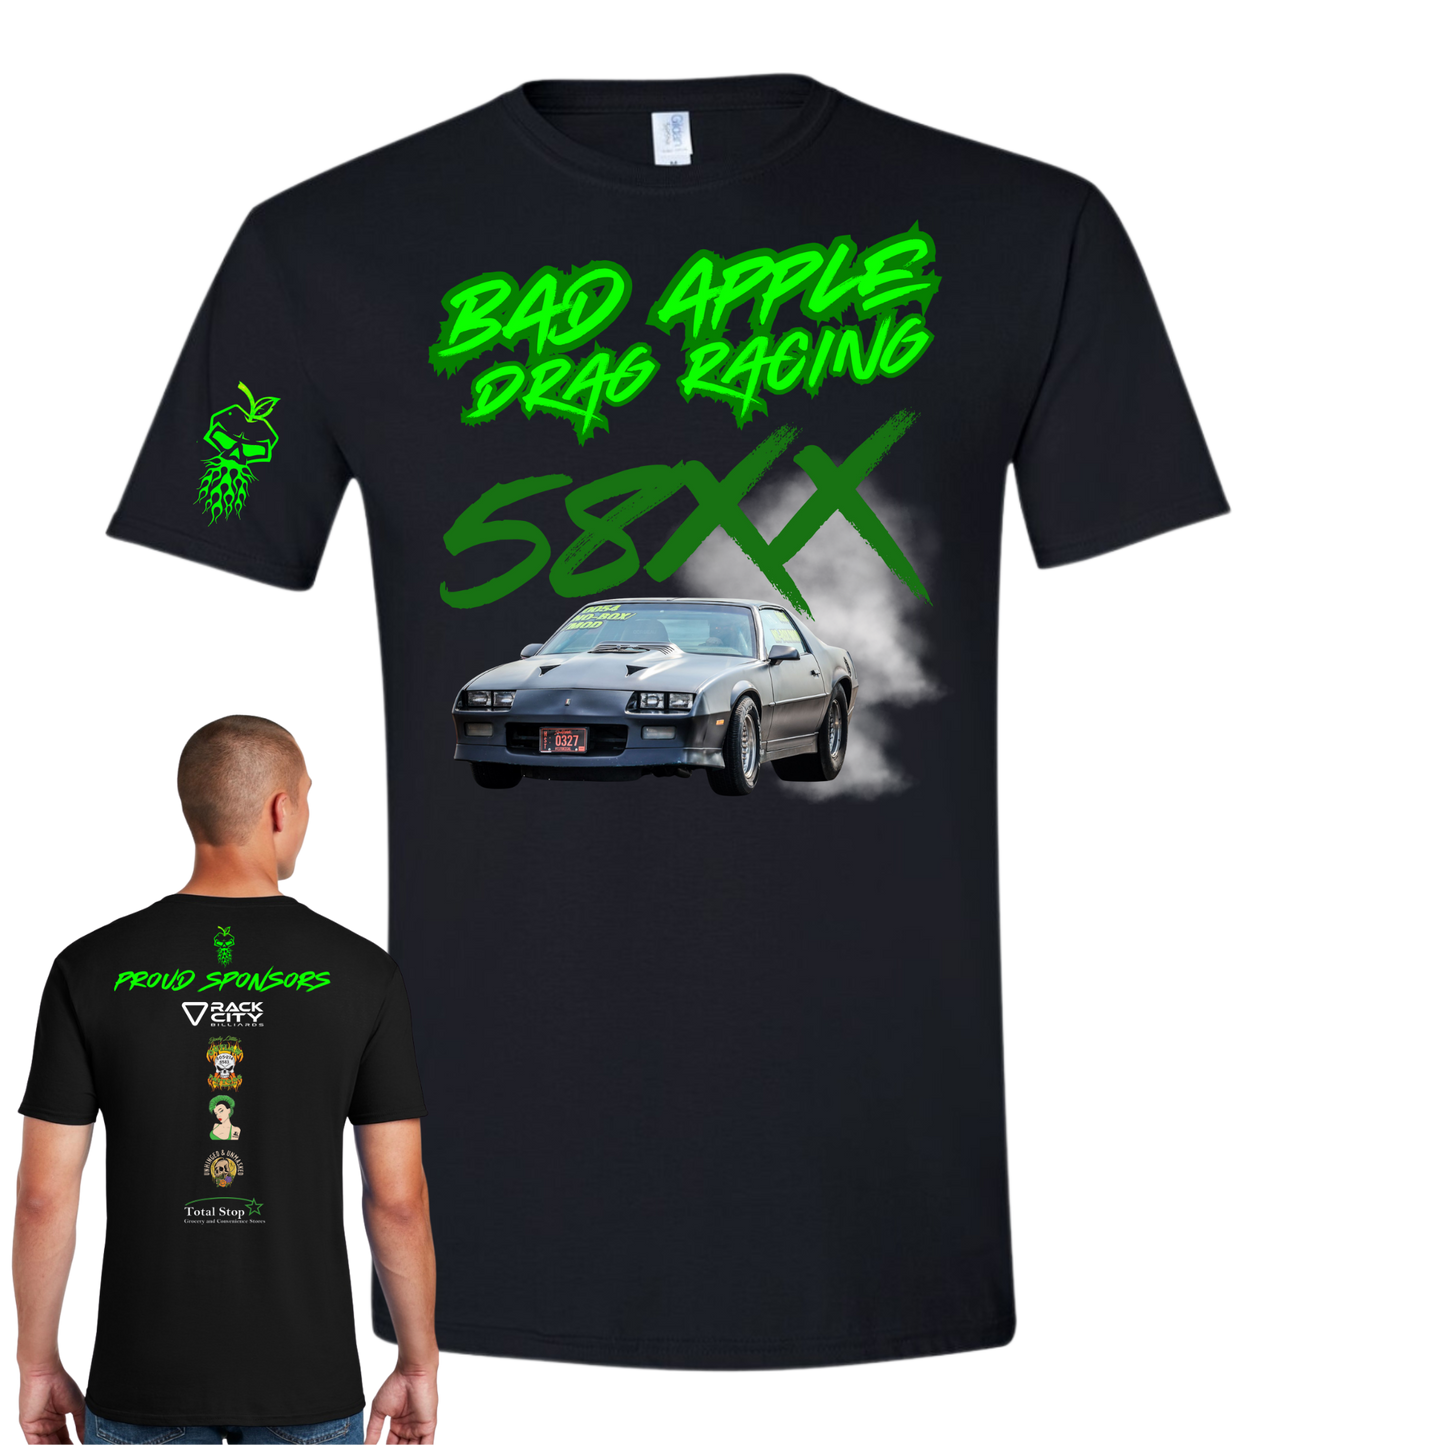 Bad Apple- Specialty Graphic Tee- 58XX Car-sleeve logo